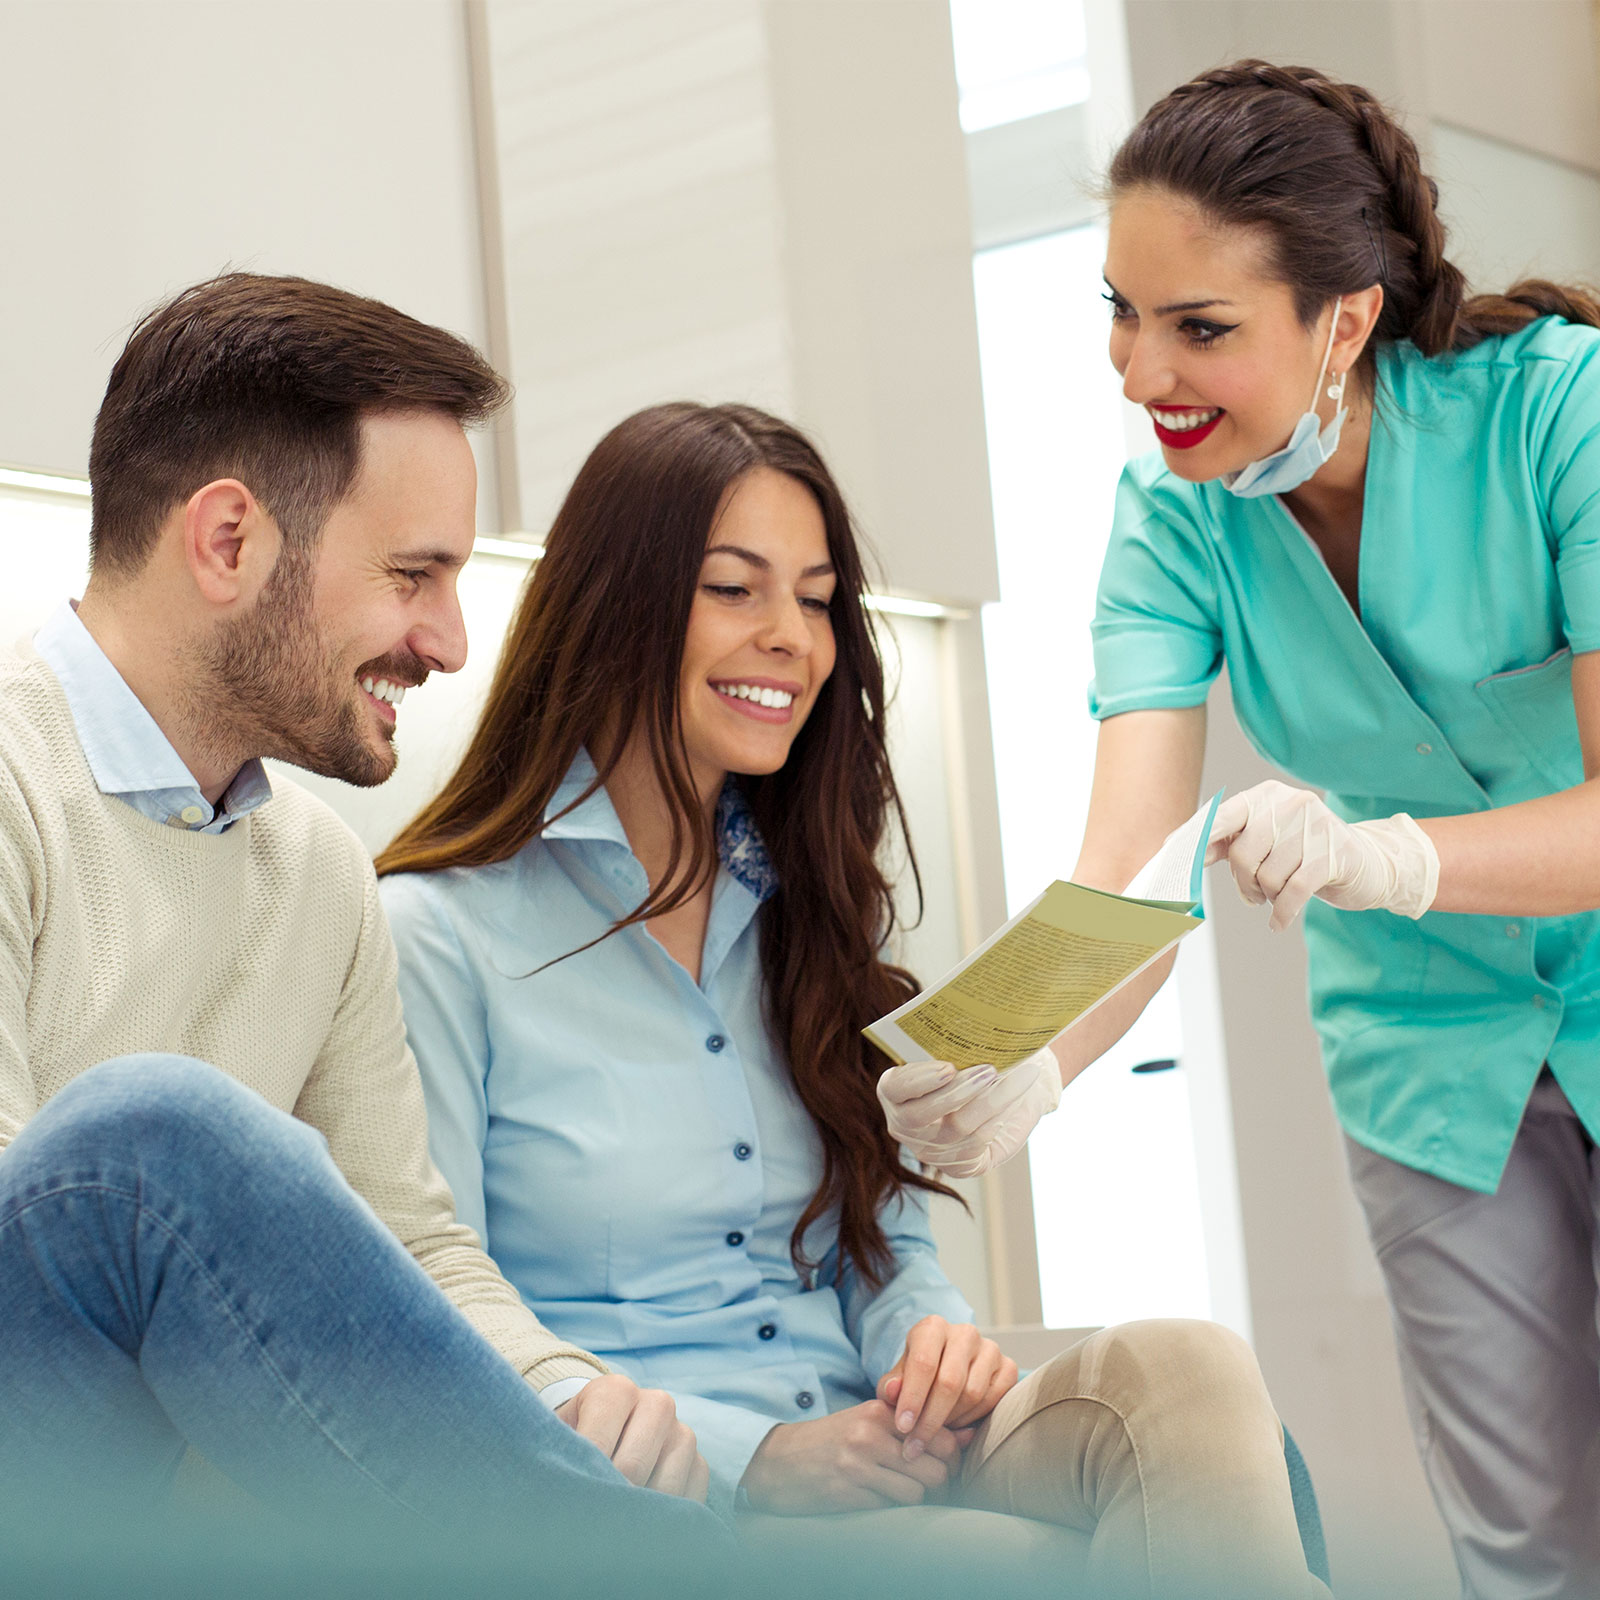 A dental assistant explains plan options to a couple.